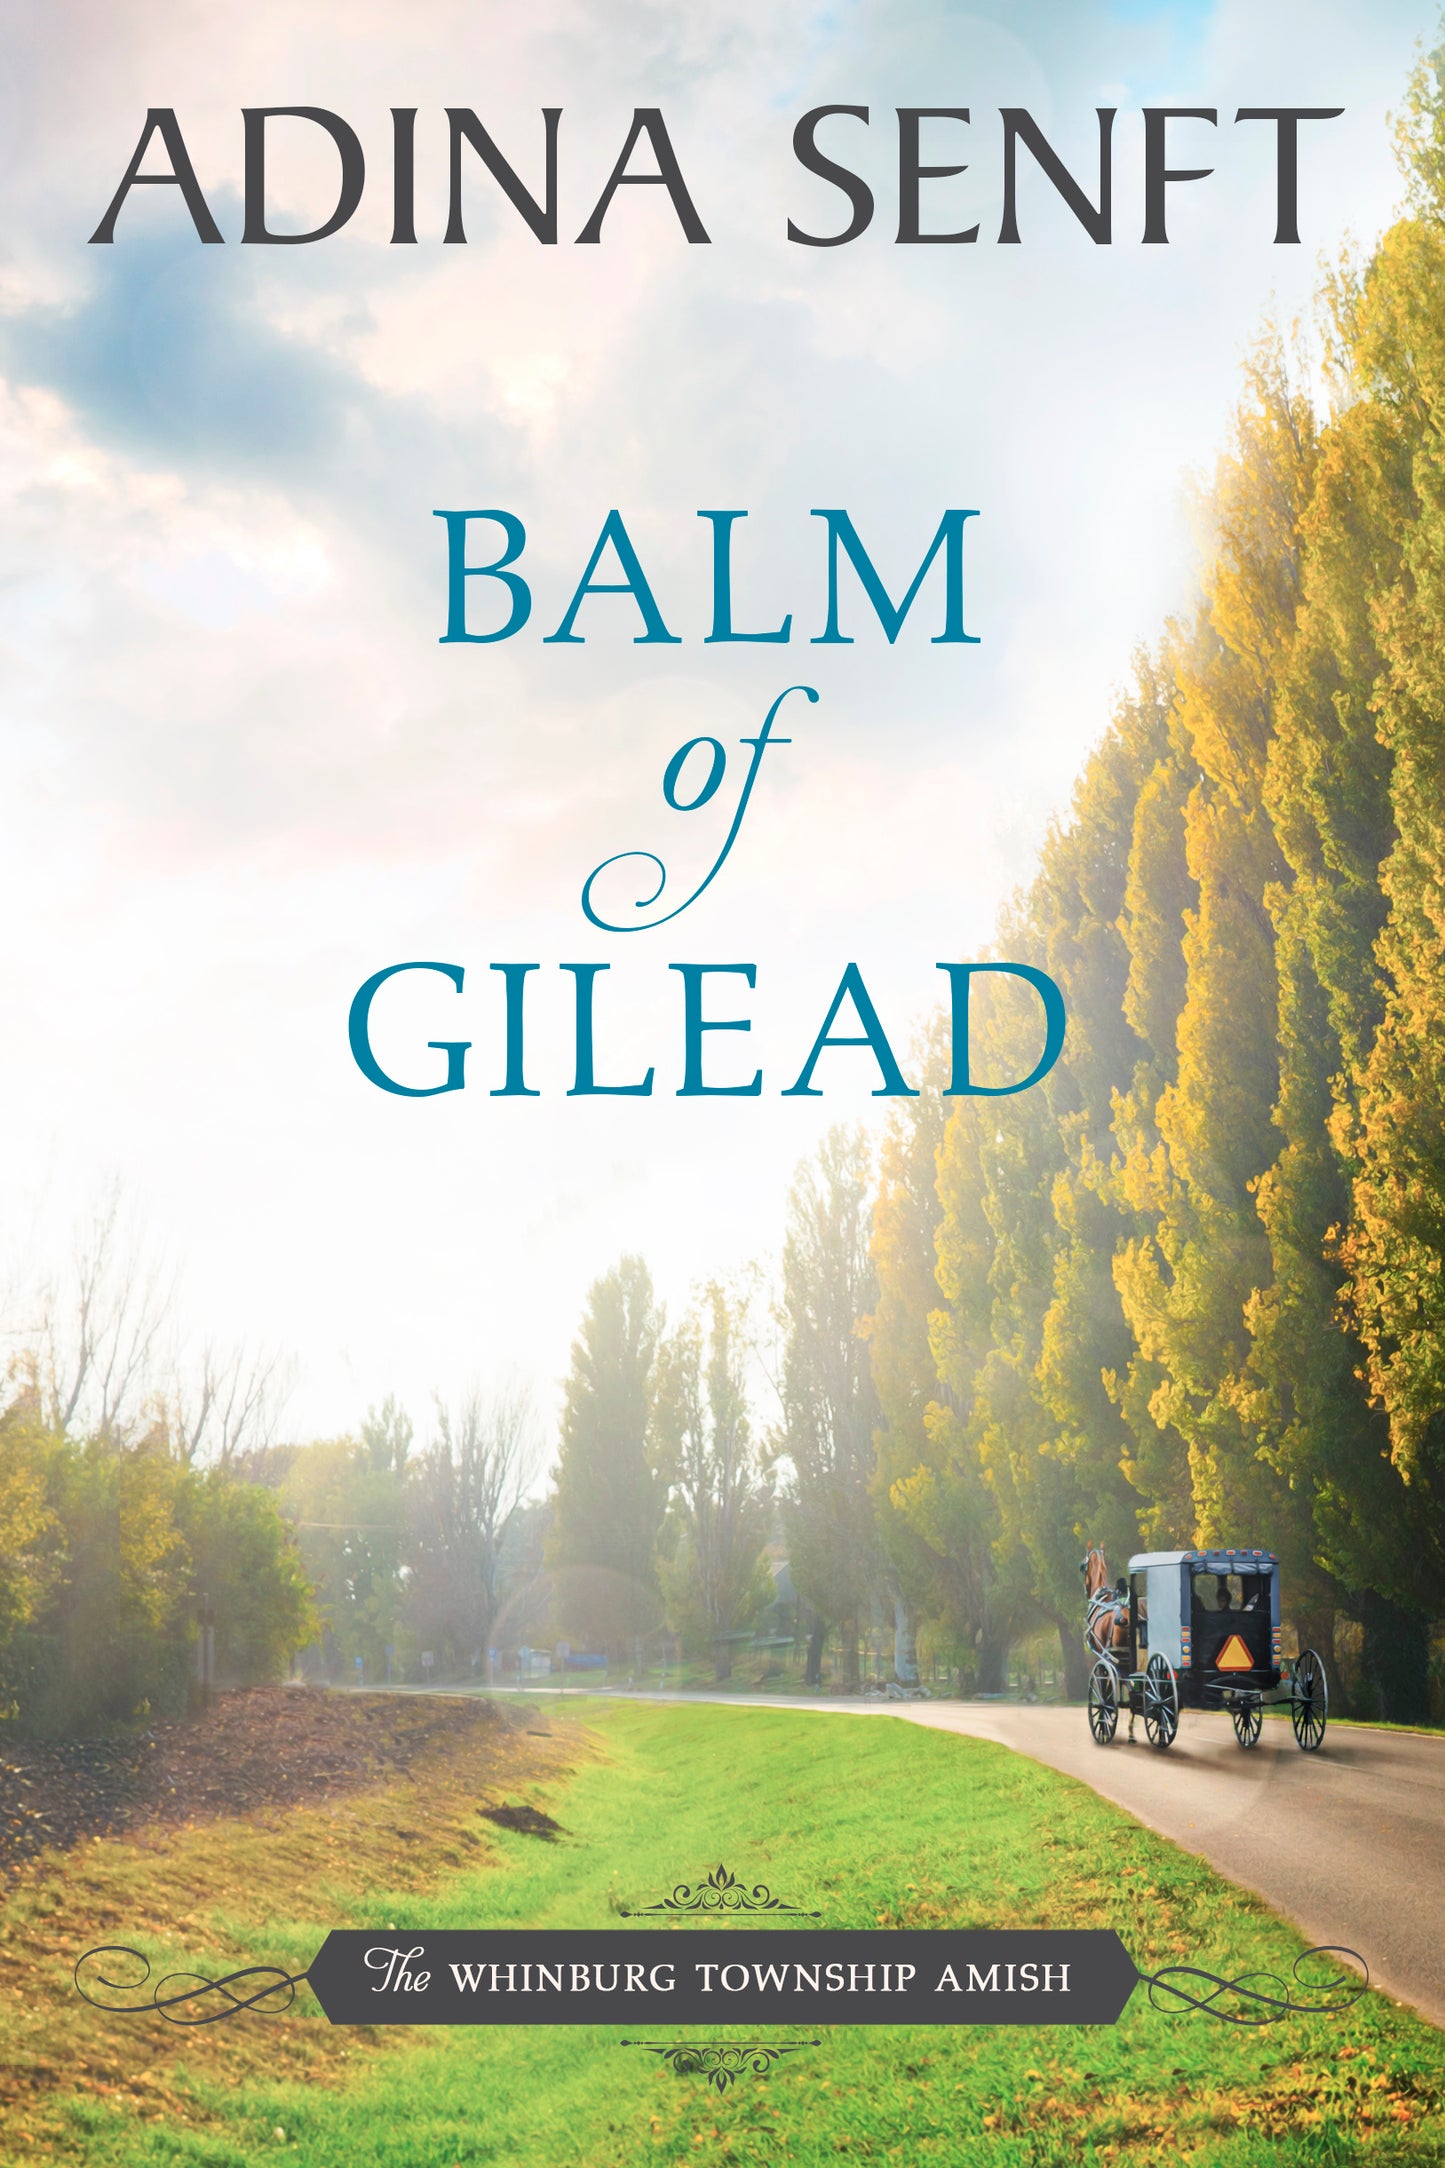 Balm of Gilead by Adina Senft, a Whinburg Township Amish women's fiction romance novel